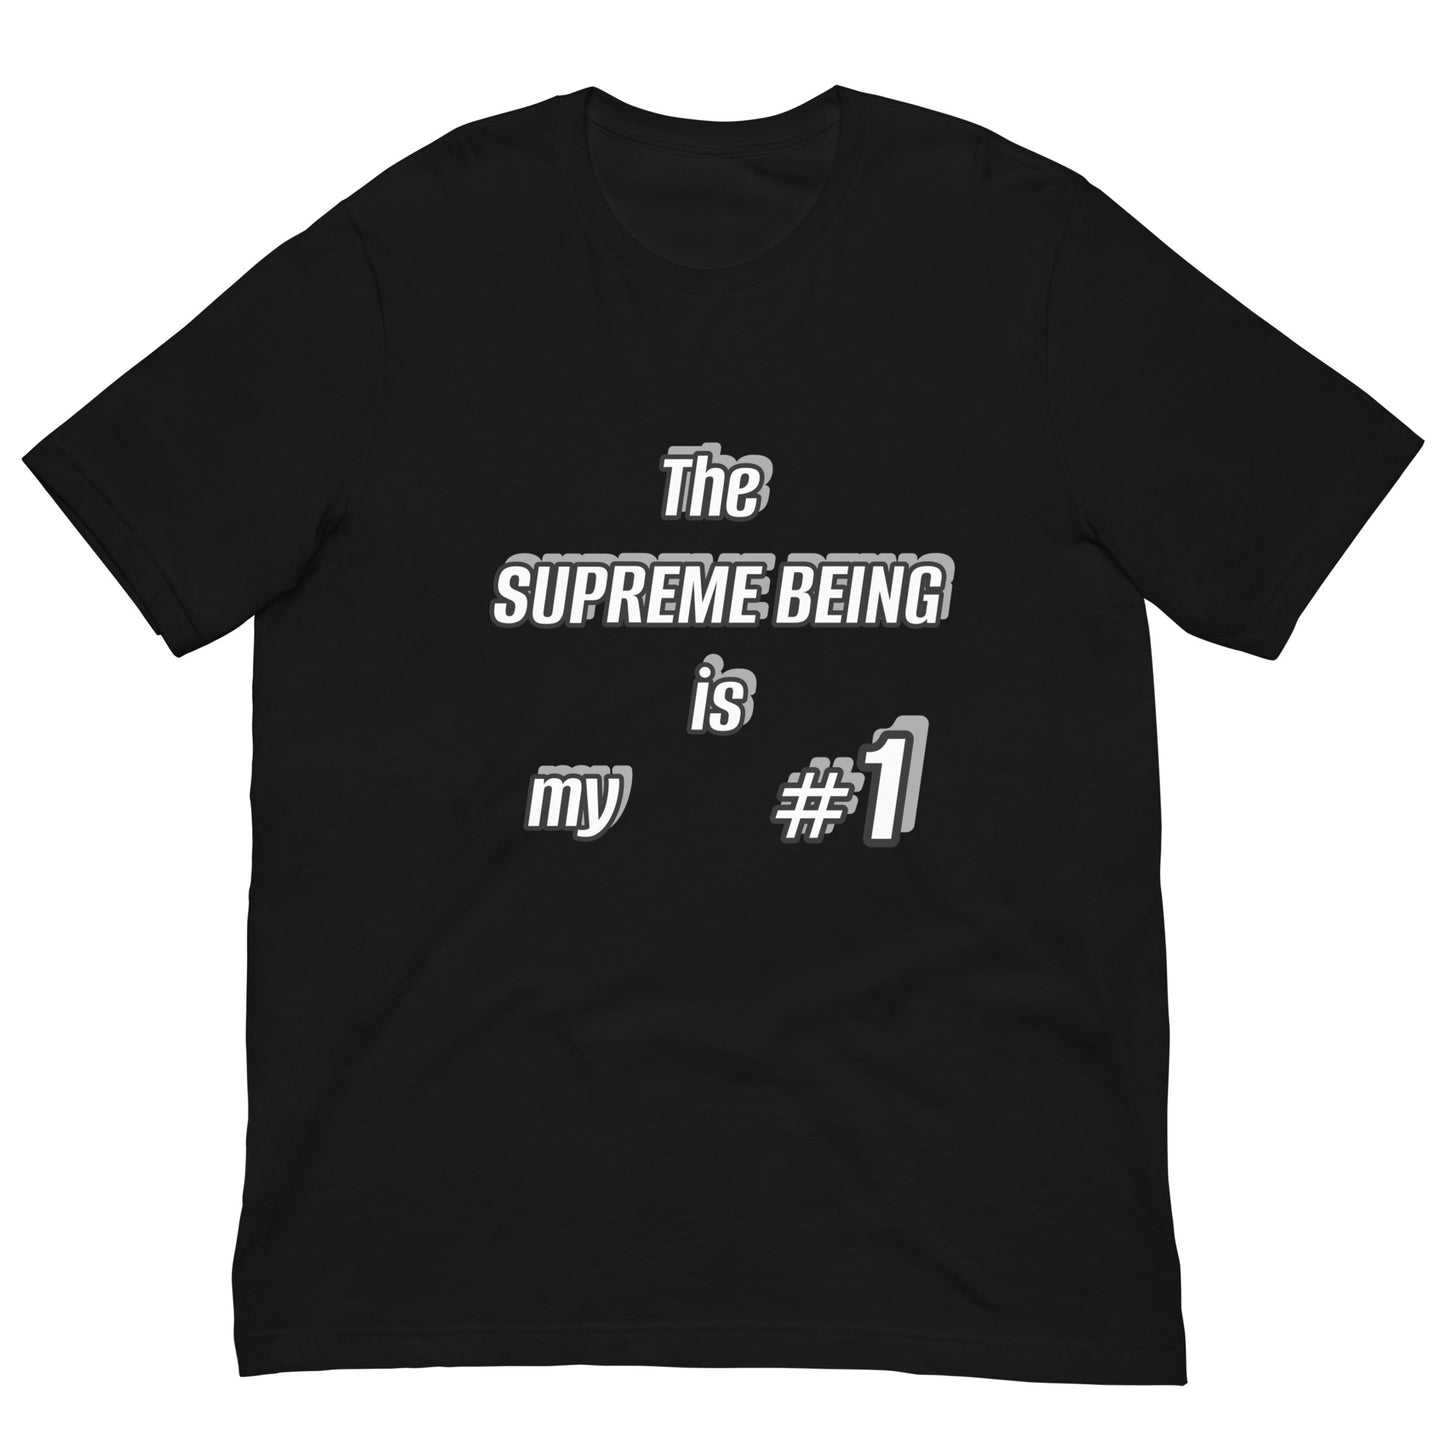 Supreme Being T-shirt CUSTOM MADE